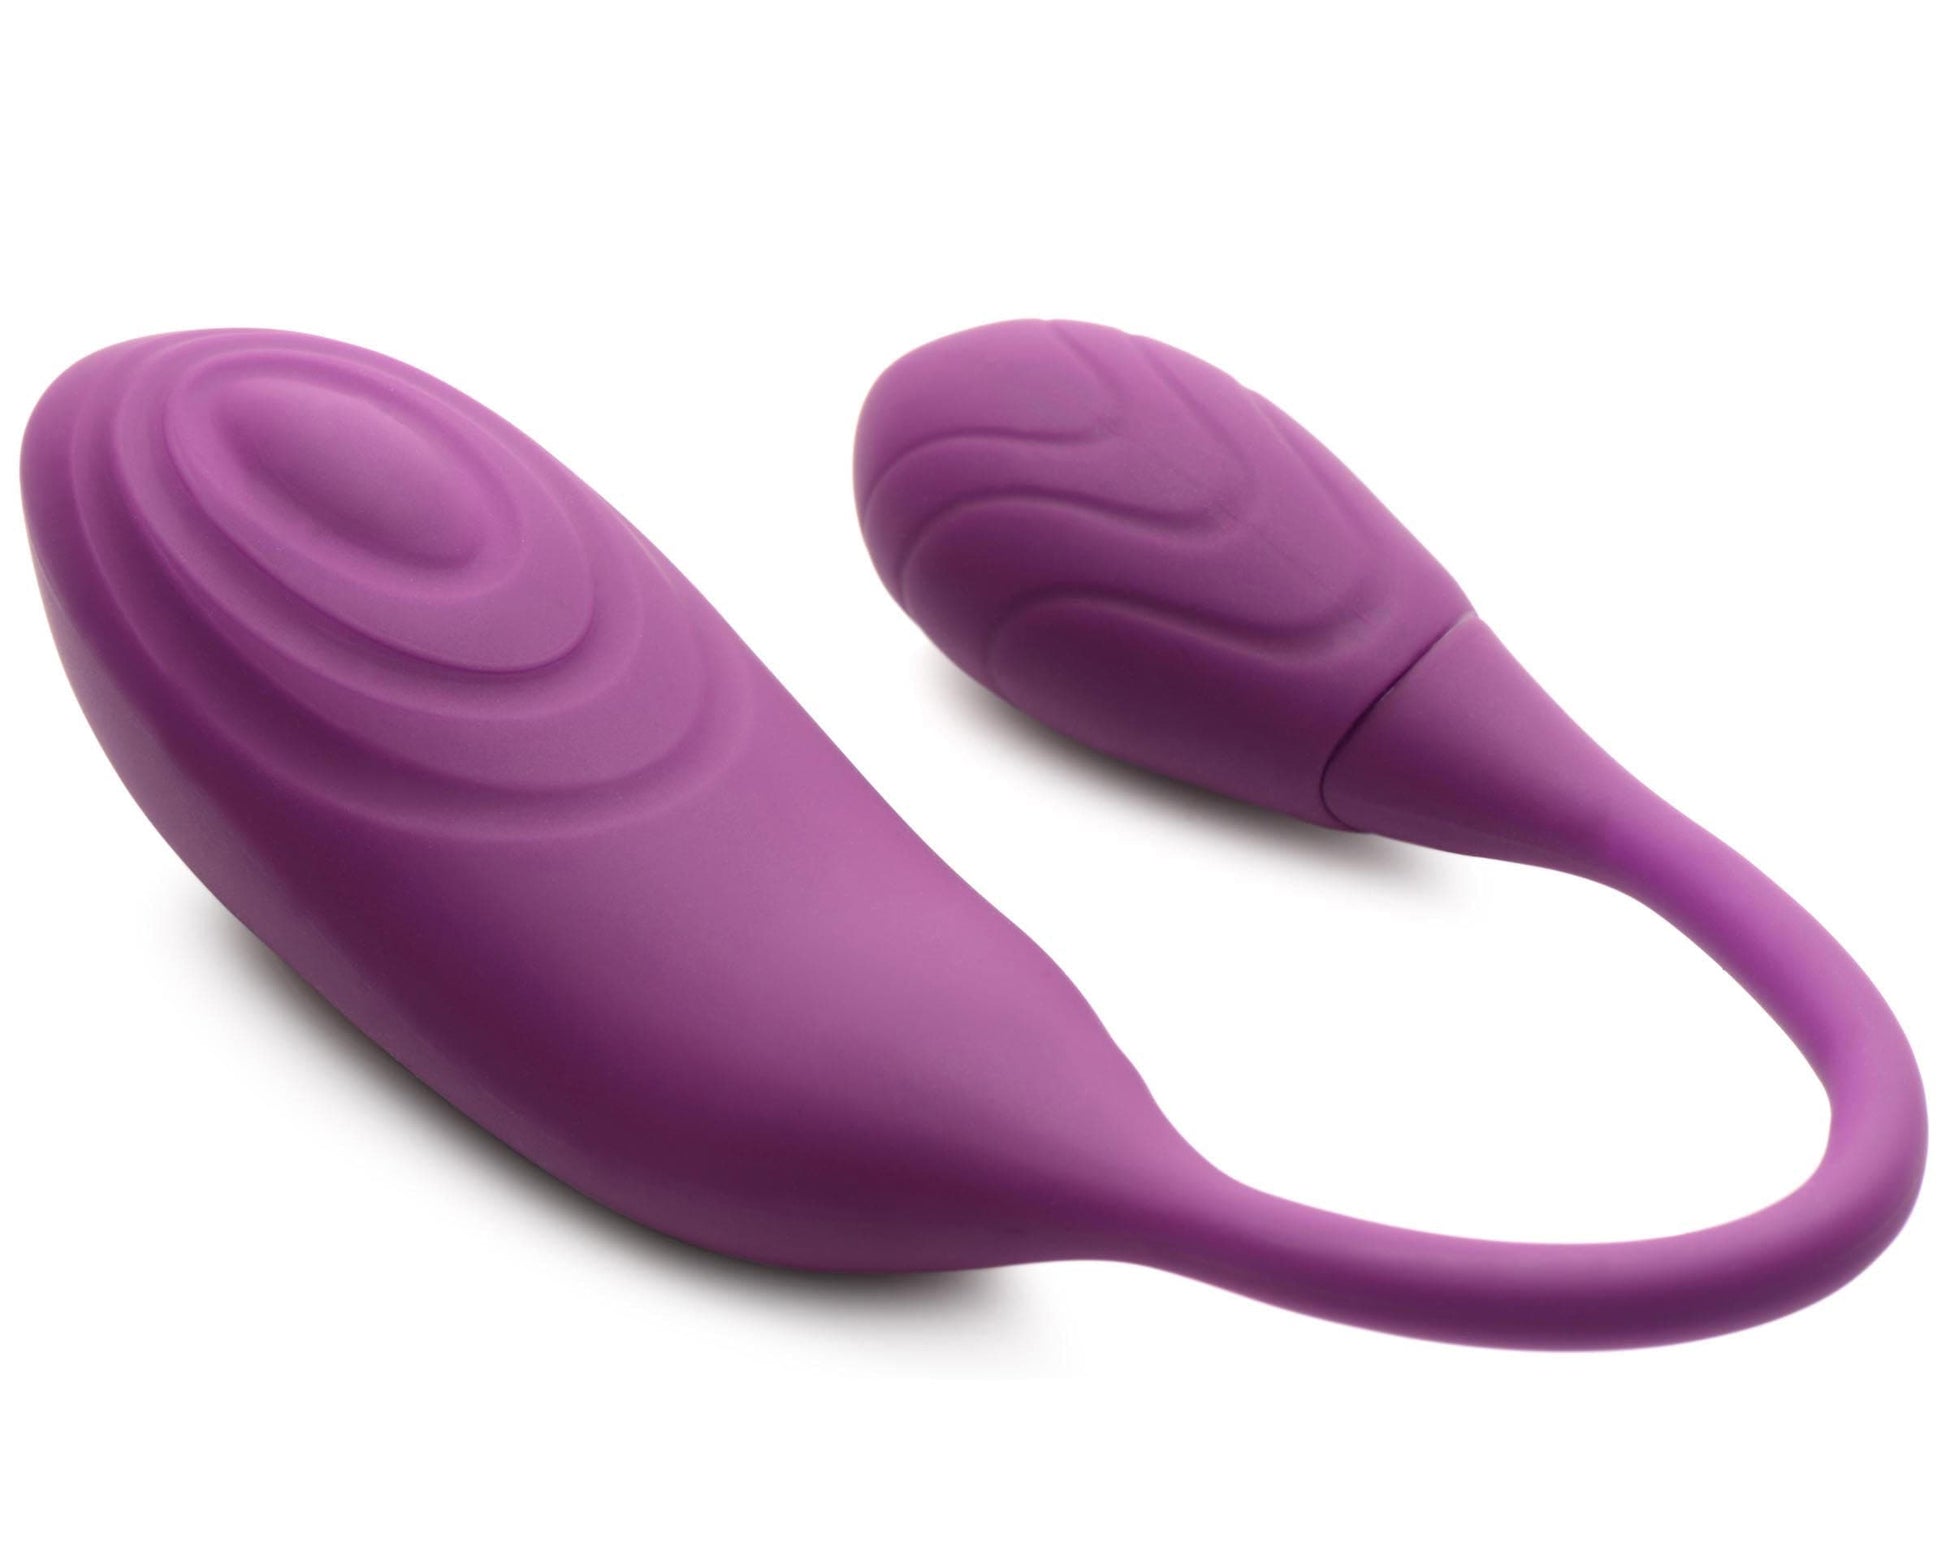 slim pulse 7x pulsing clit stimulator and vibrating egg purple